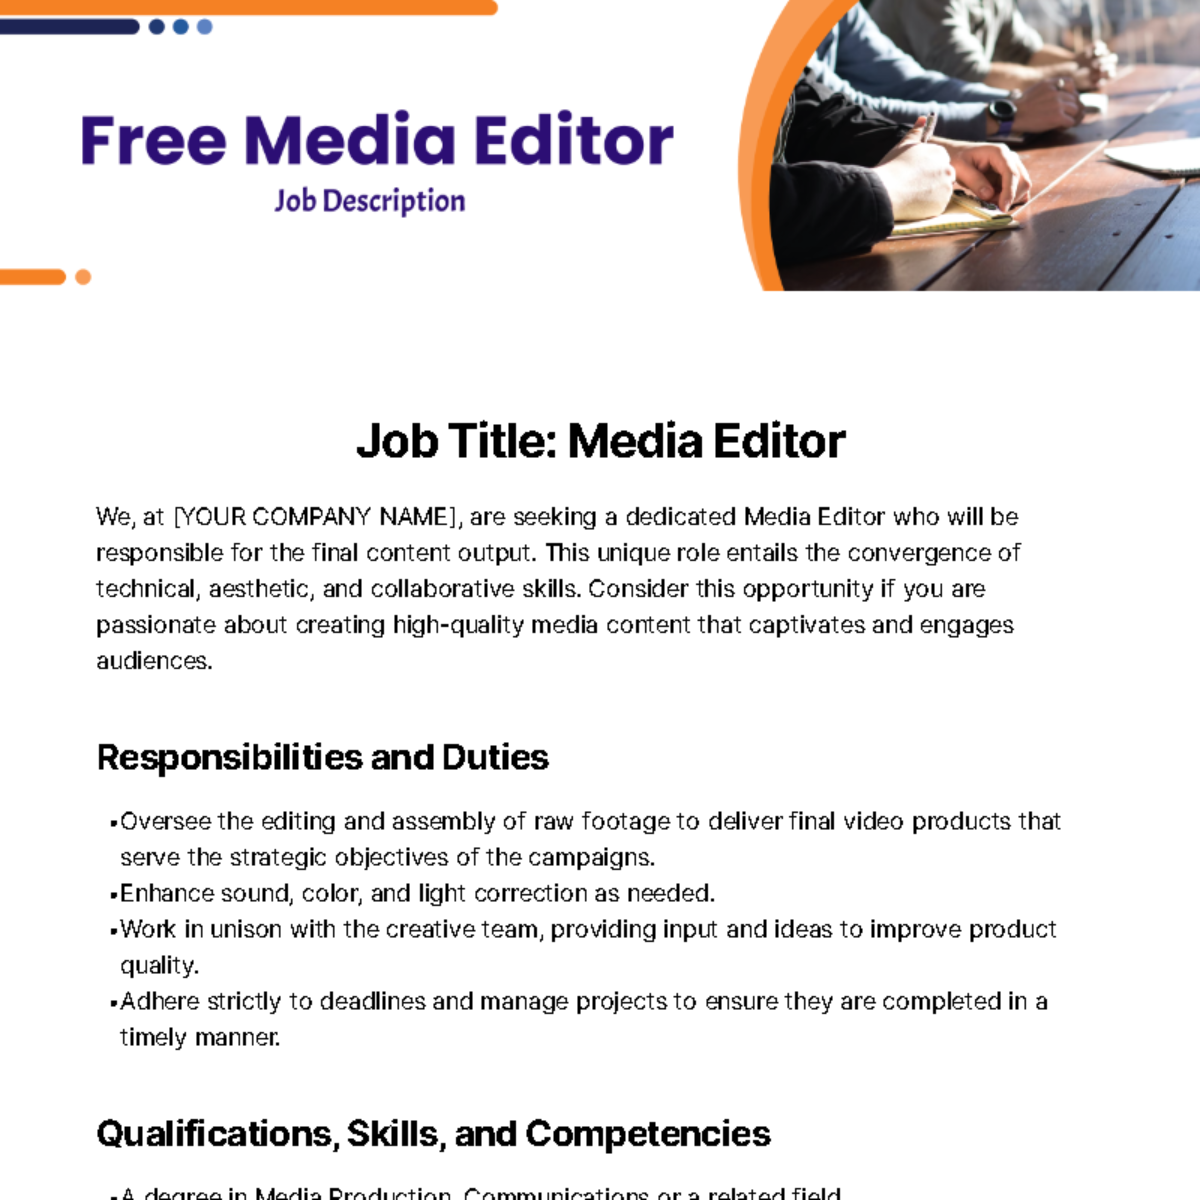 Free Media Editor Job Description Template